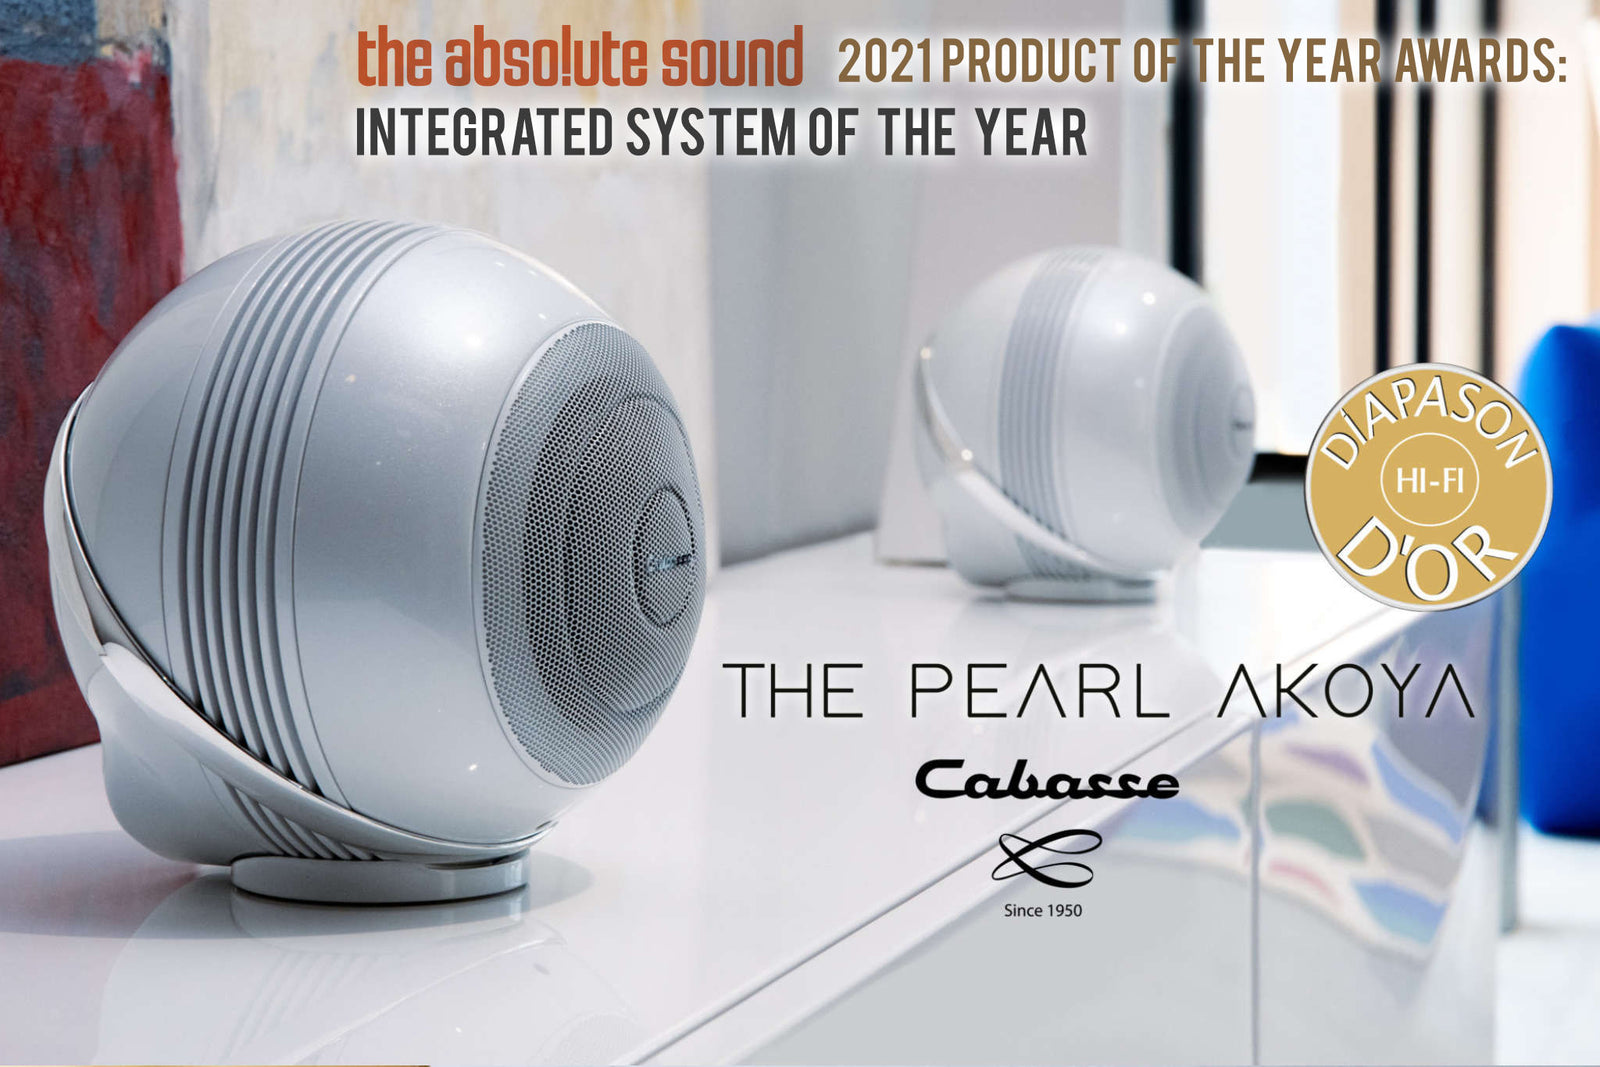 Cabasse Pearl Akoya Powered DSP Loudspeaker - The Absolute Sound